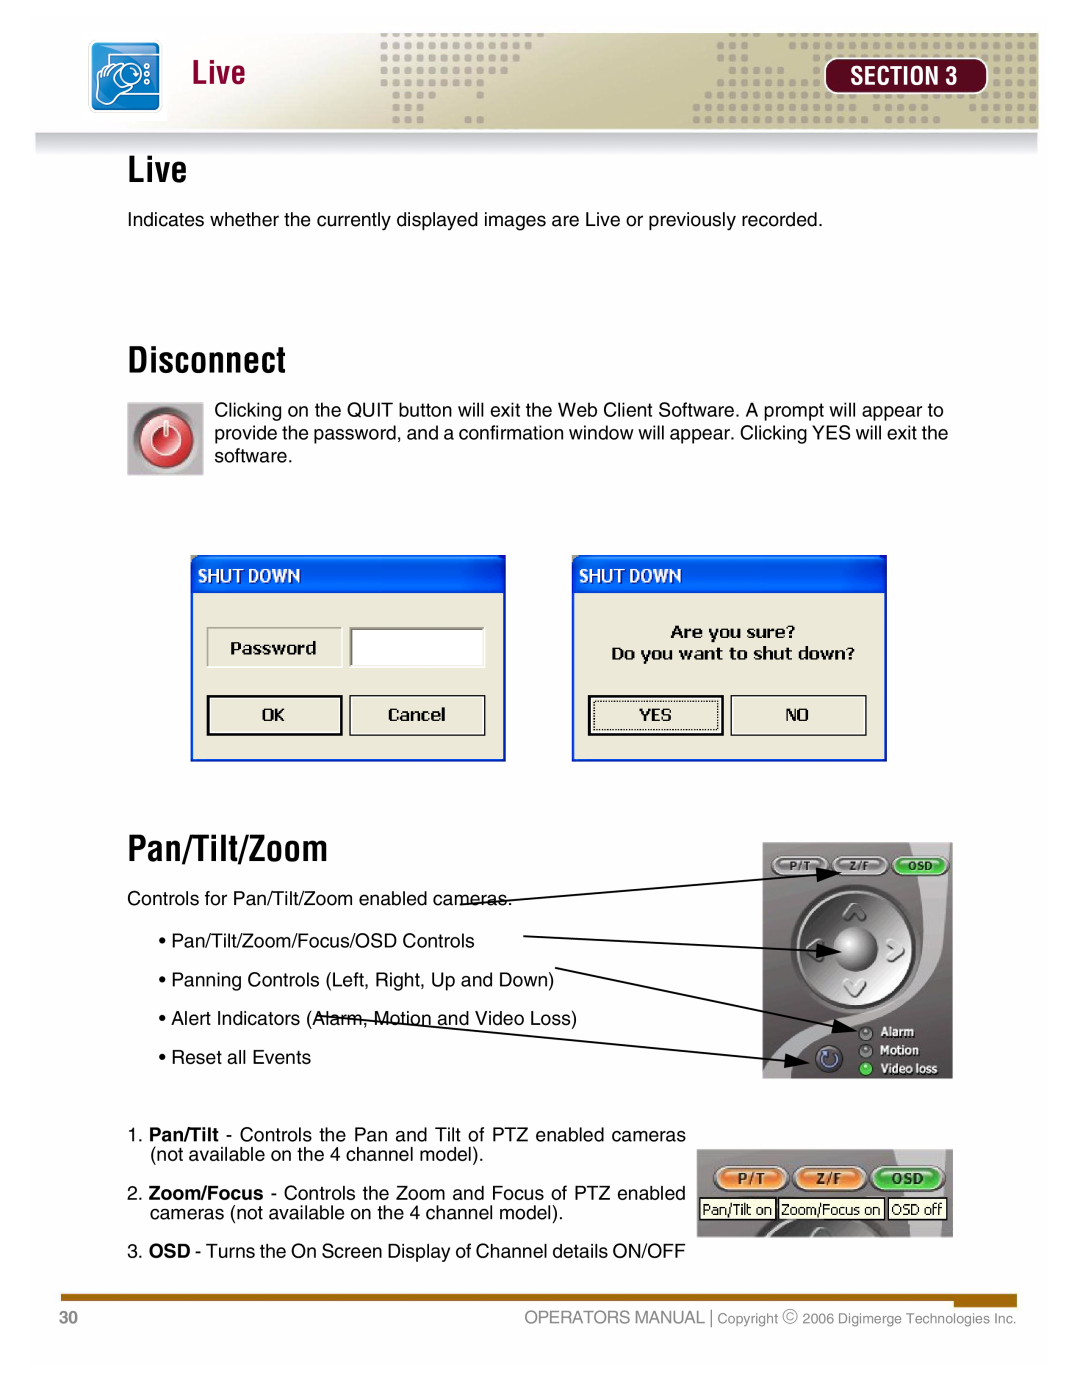 LOREX Technology DHU500 manual Live, Disconnect, Pan/Tilt/Zoom, Section 